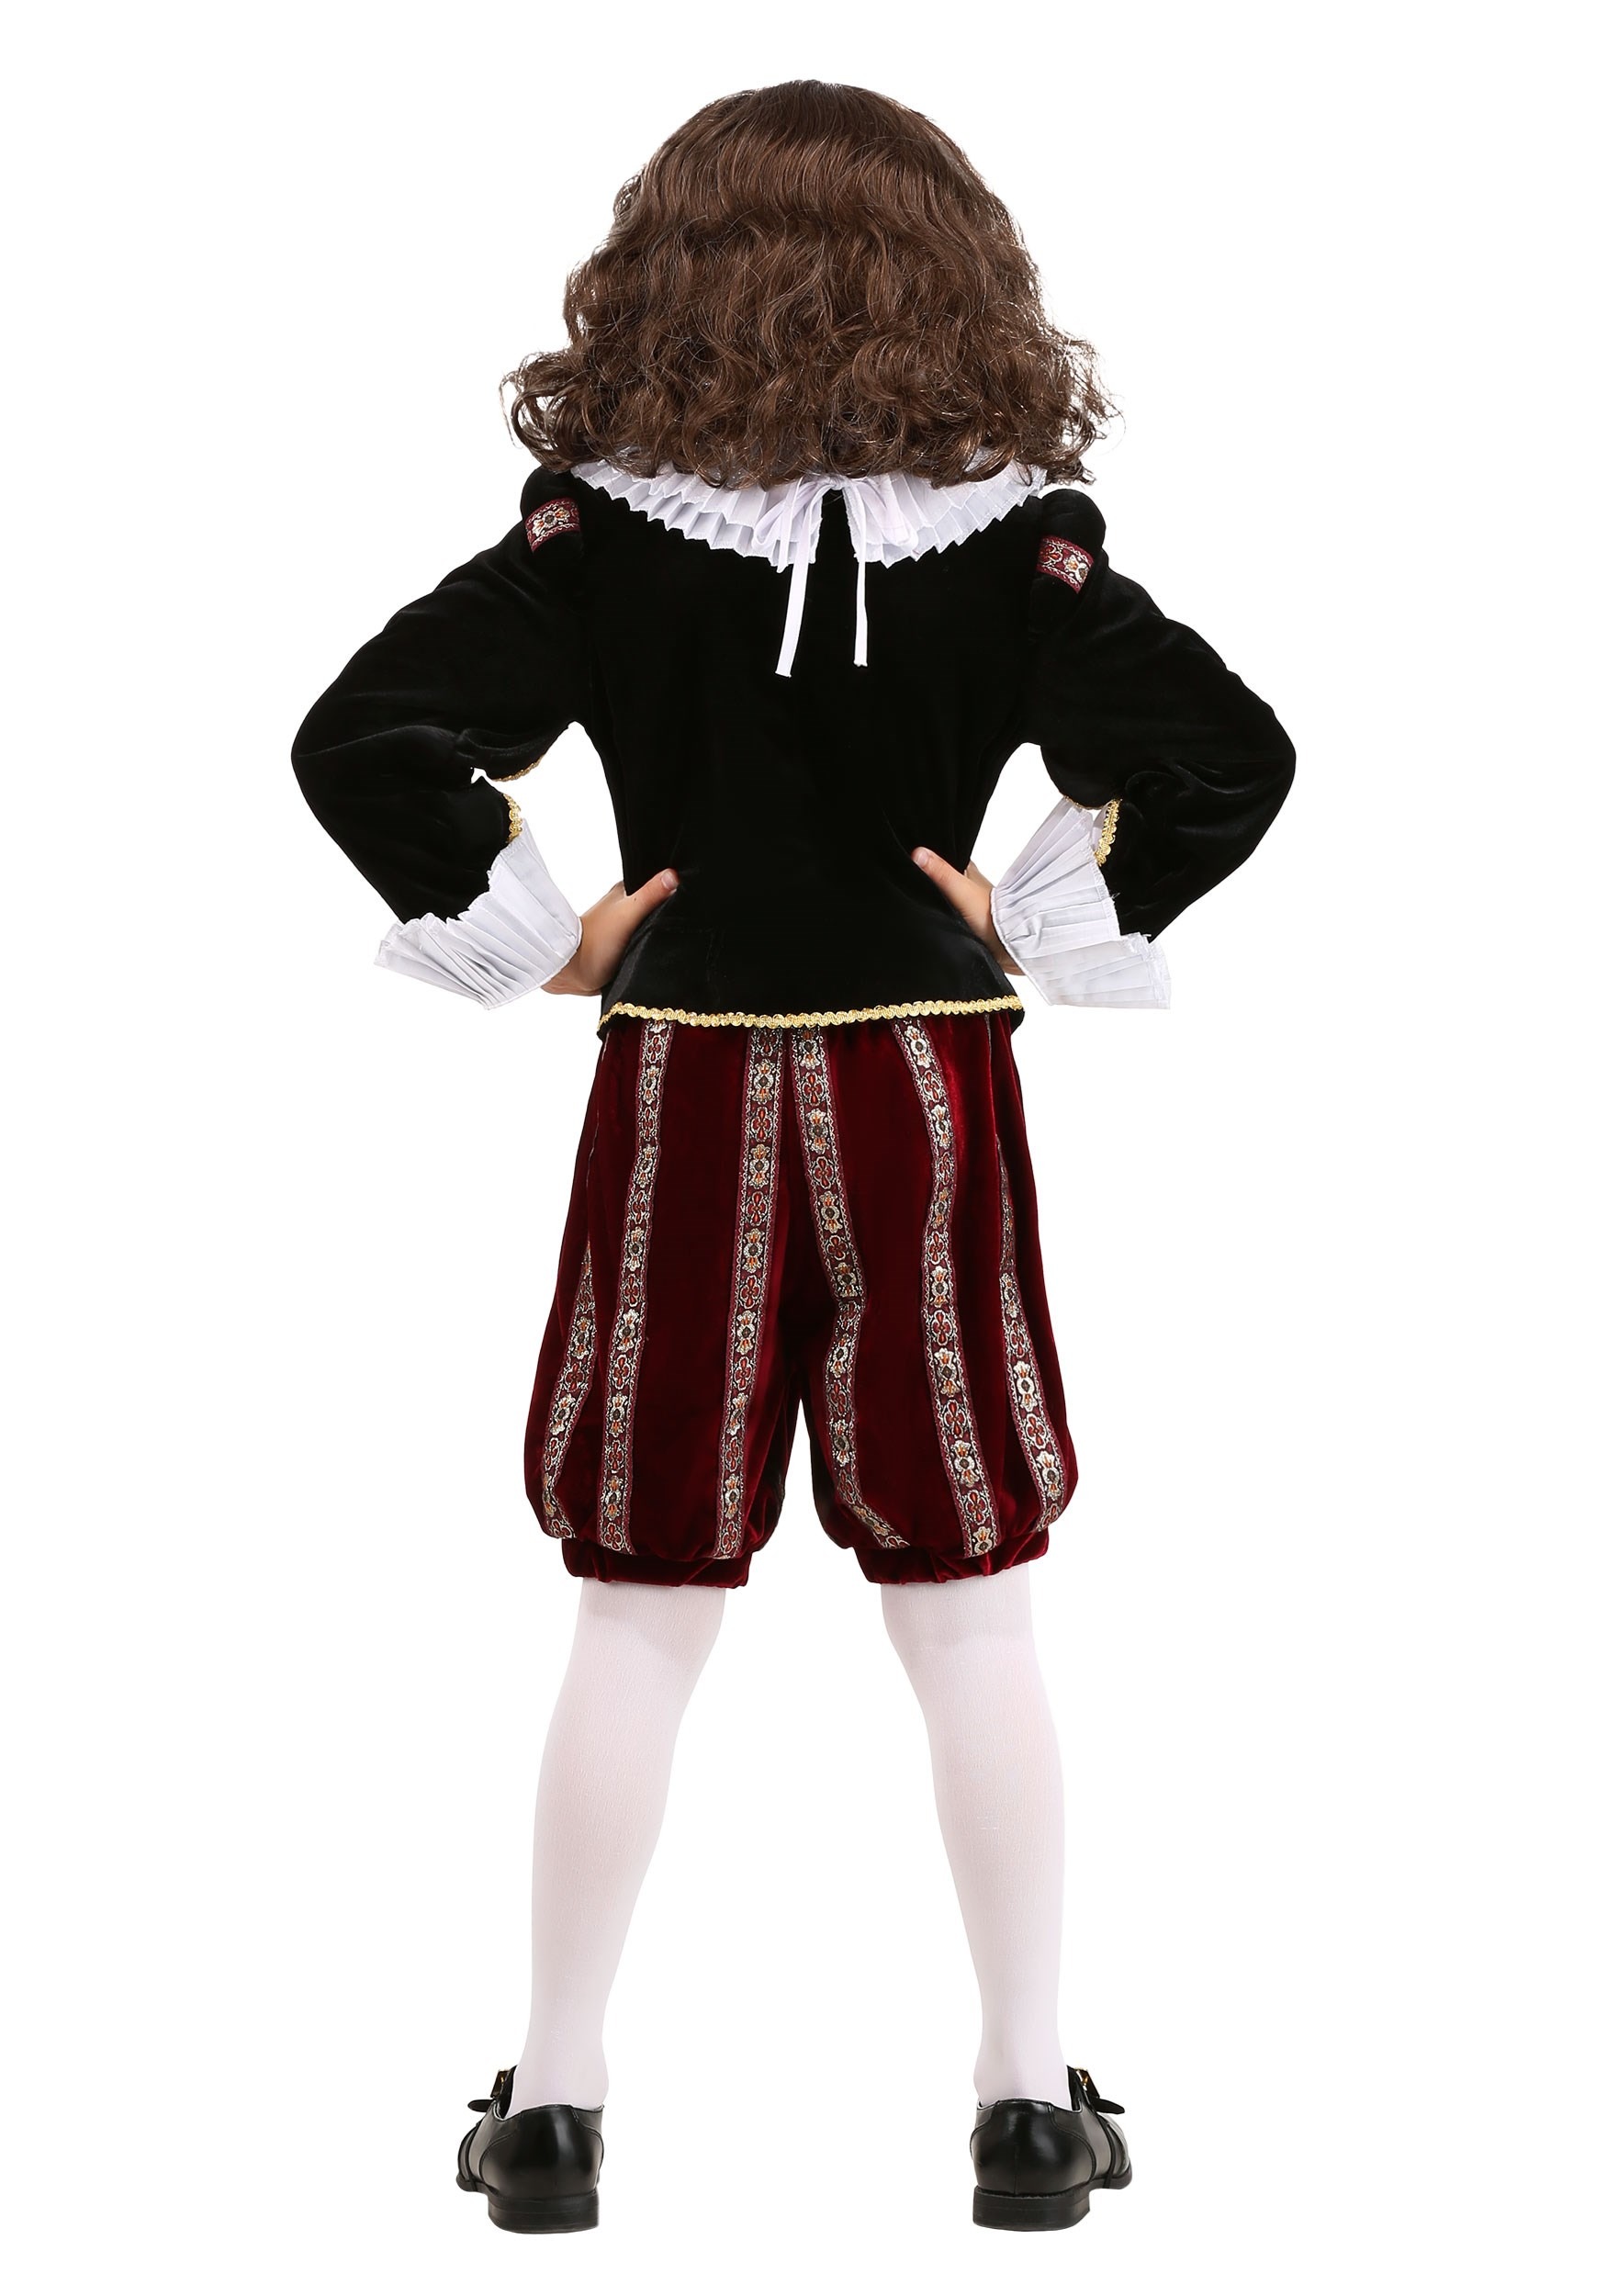 William Shakespeare Costume for Boys